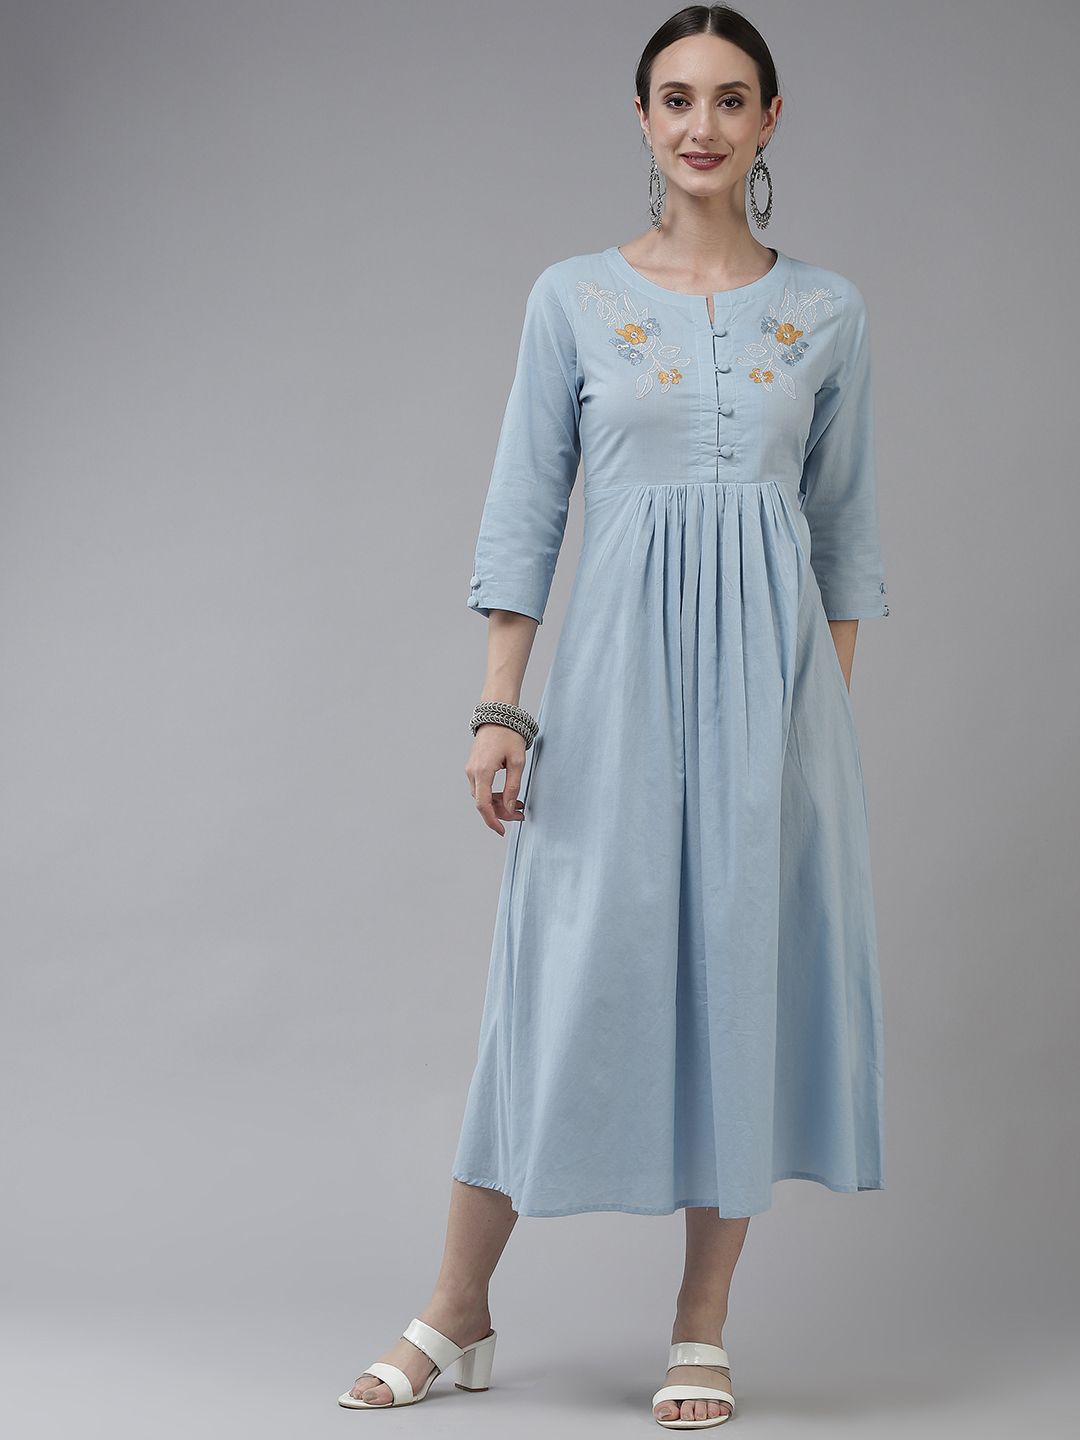 Yufta Blue Embroidered Ethnic A-Line Midi Dress Price in India